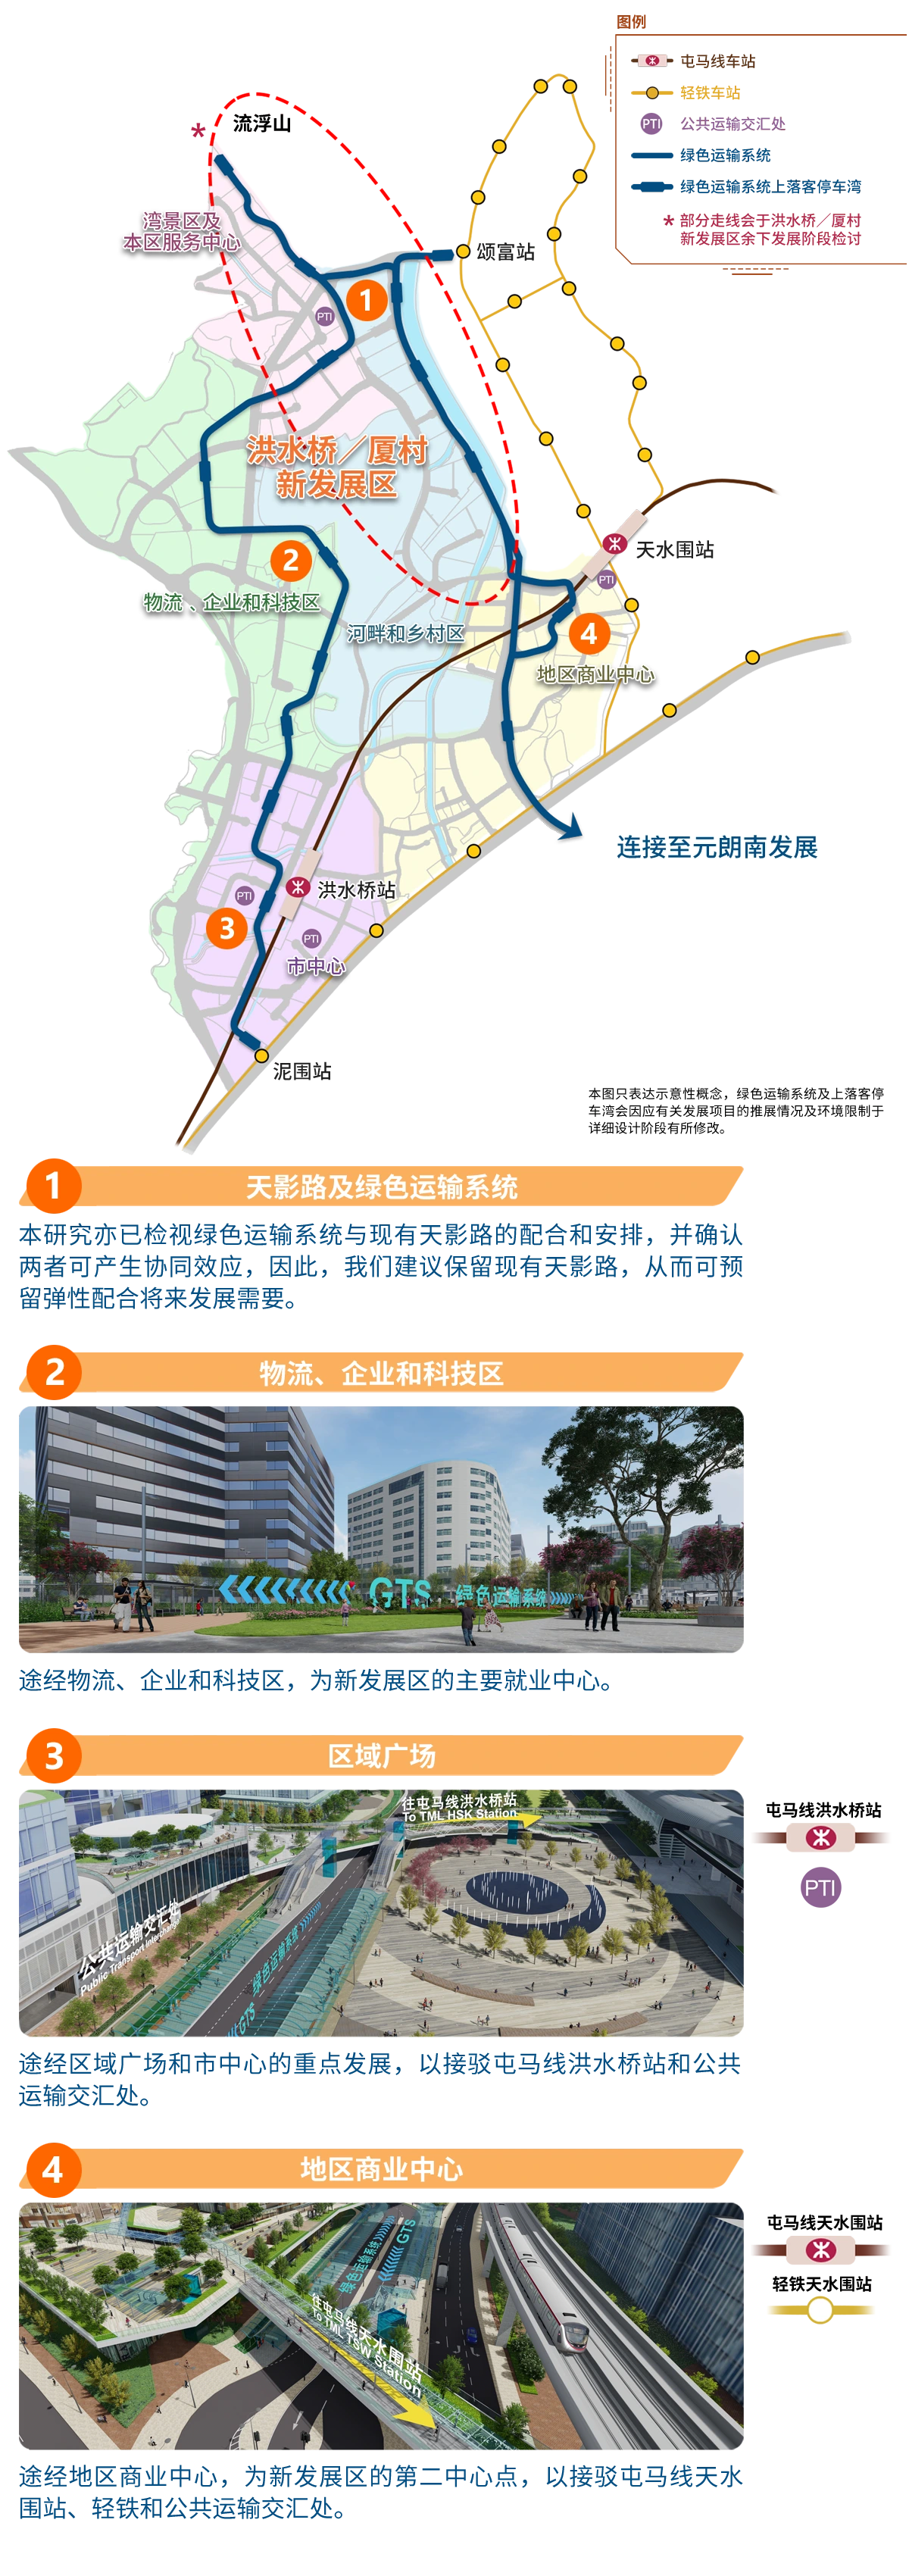 Hung Shui Kiu/Ha Tsuen New Development Area